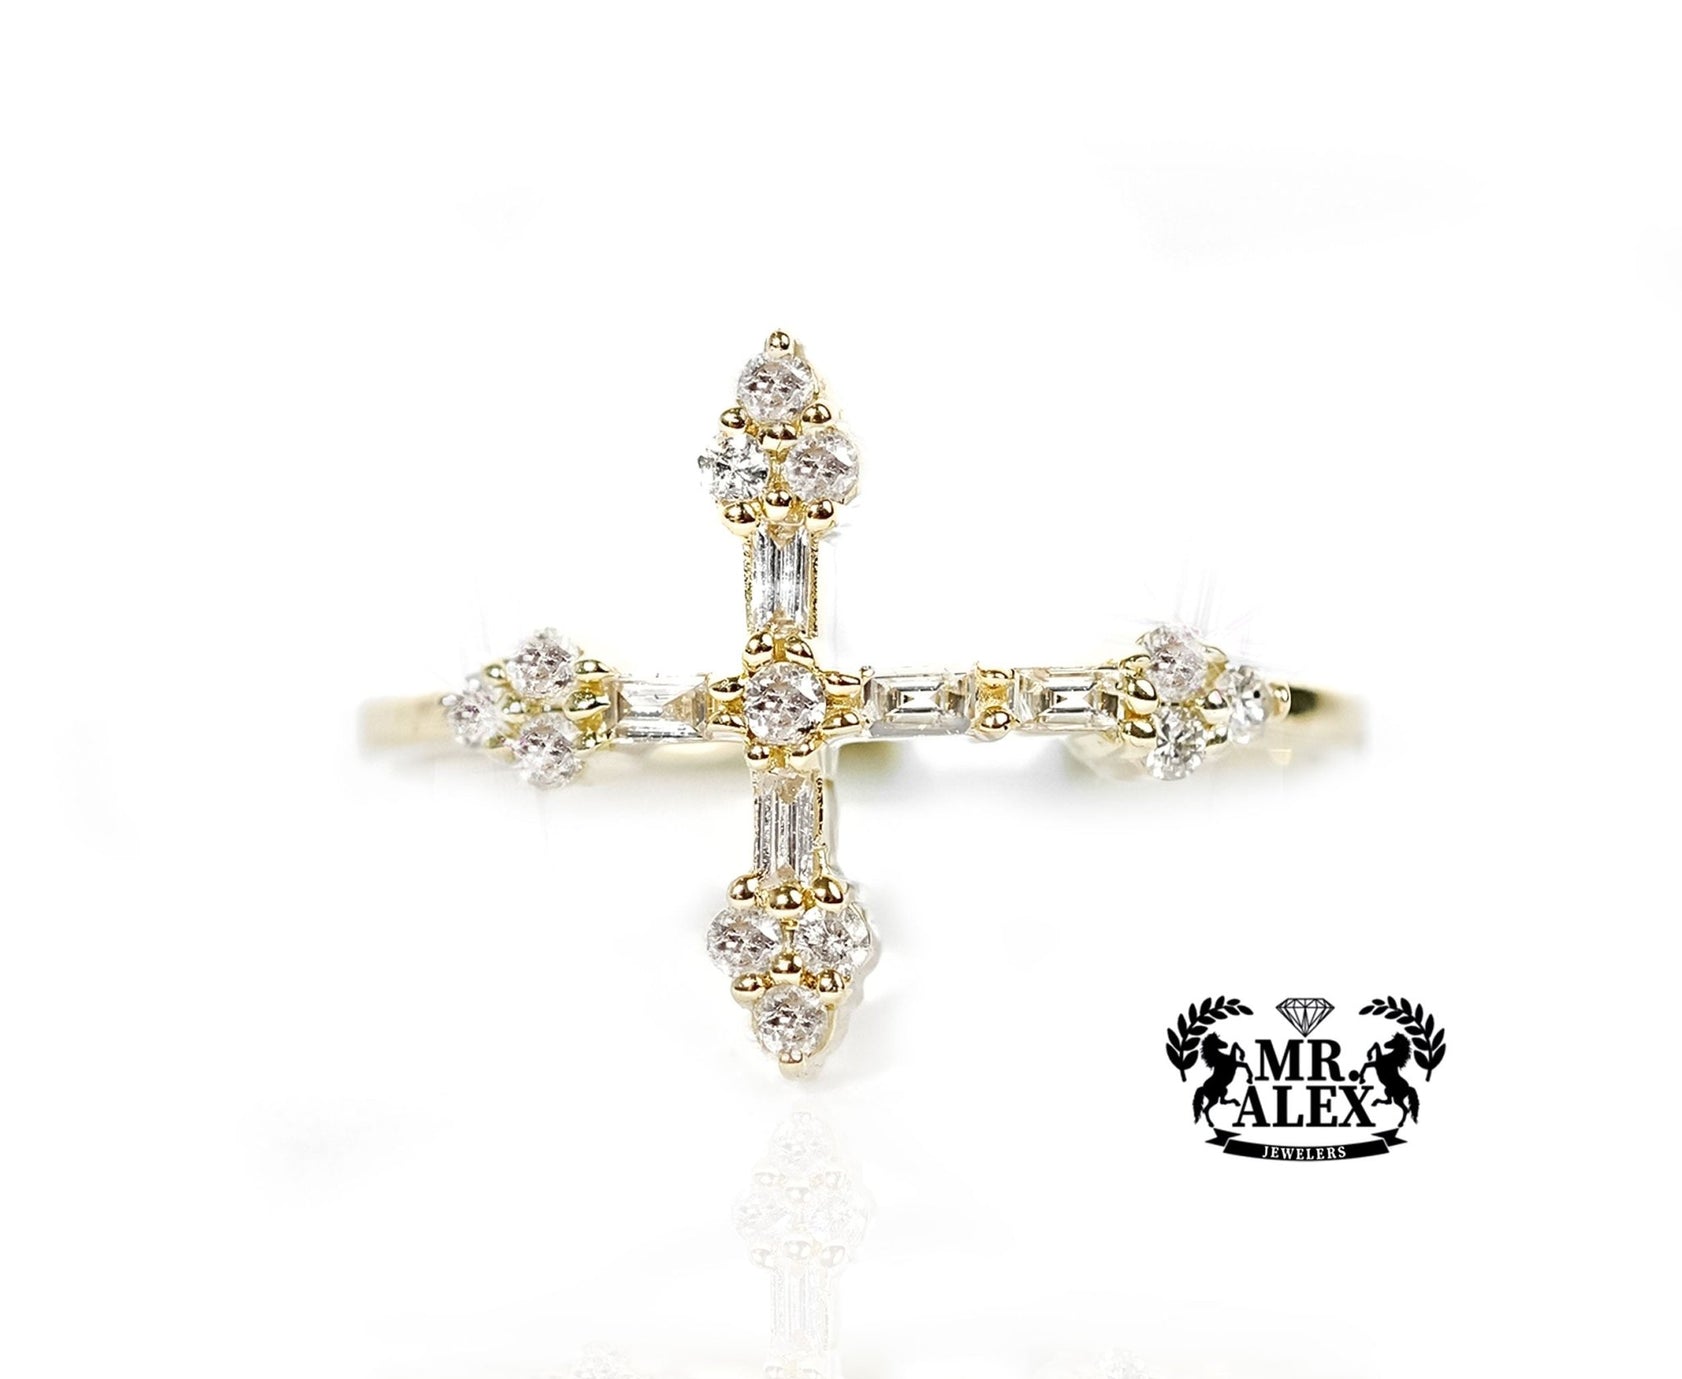 10k Gold Elegant Cross Diamond Ring 0.25ct - Mr. Alex Jewelry